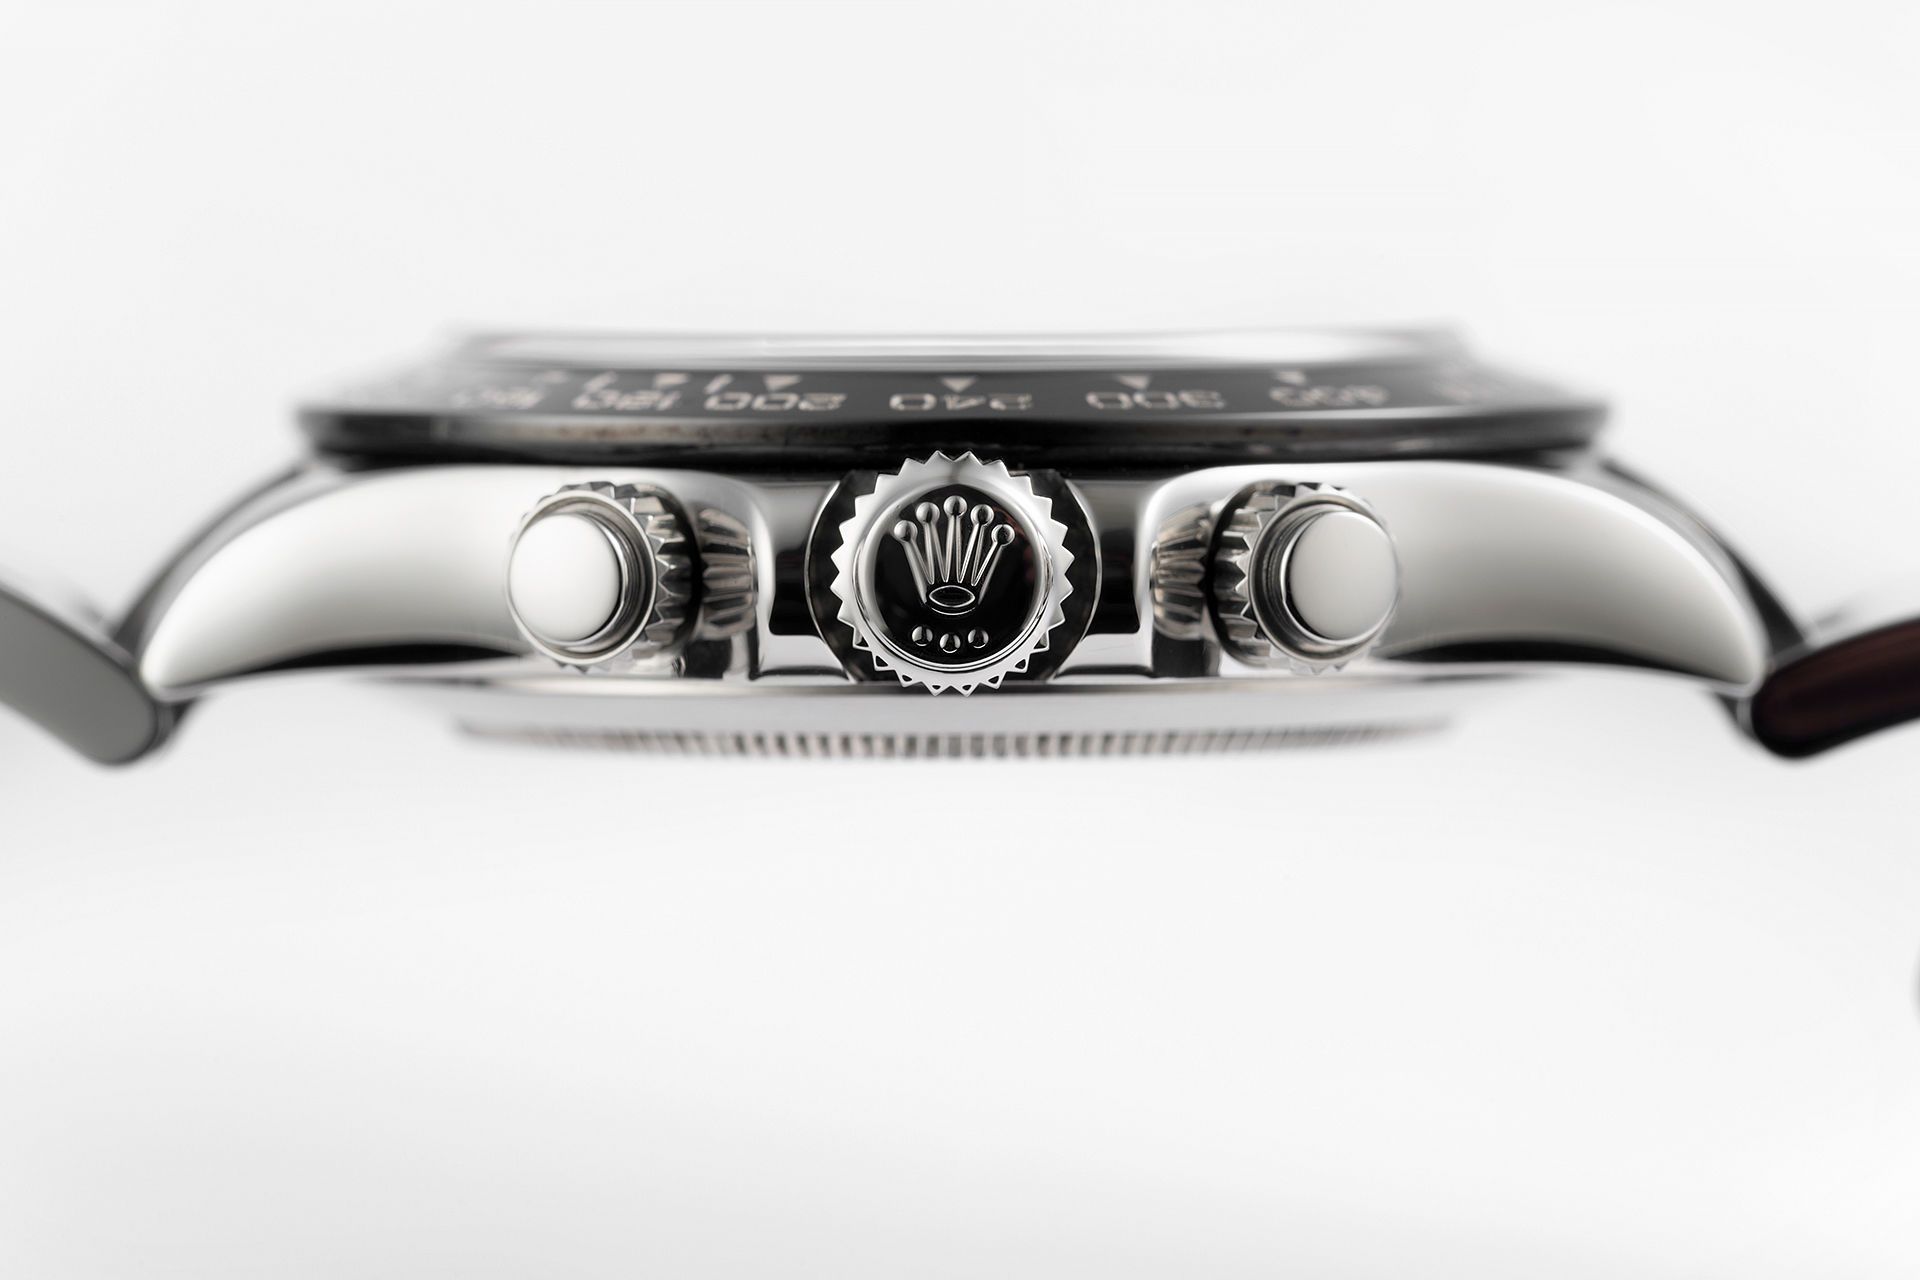 ref 116500LN | 'Cerachrom Model' Rolex Warranty | Rolex Cosmograph Daytona